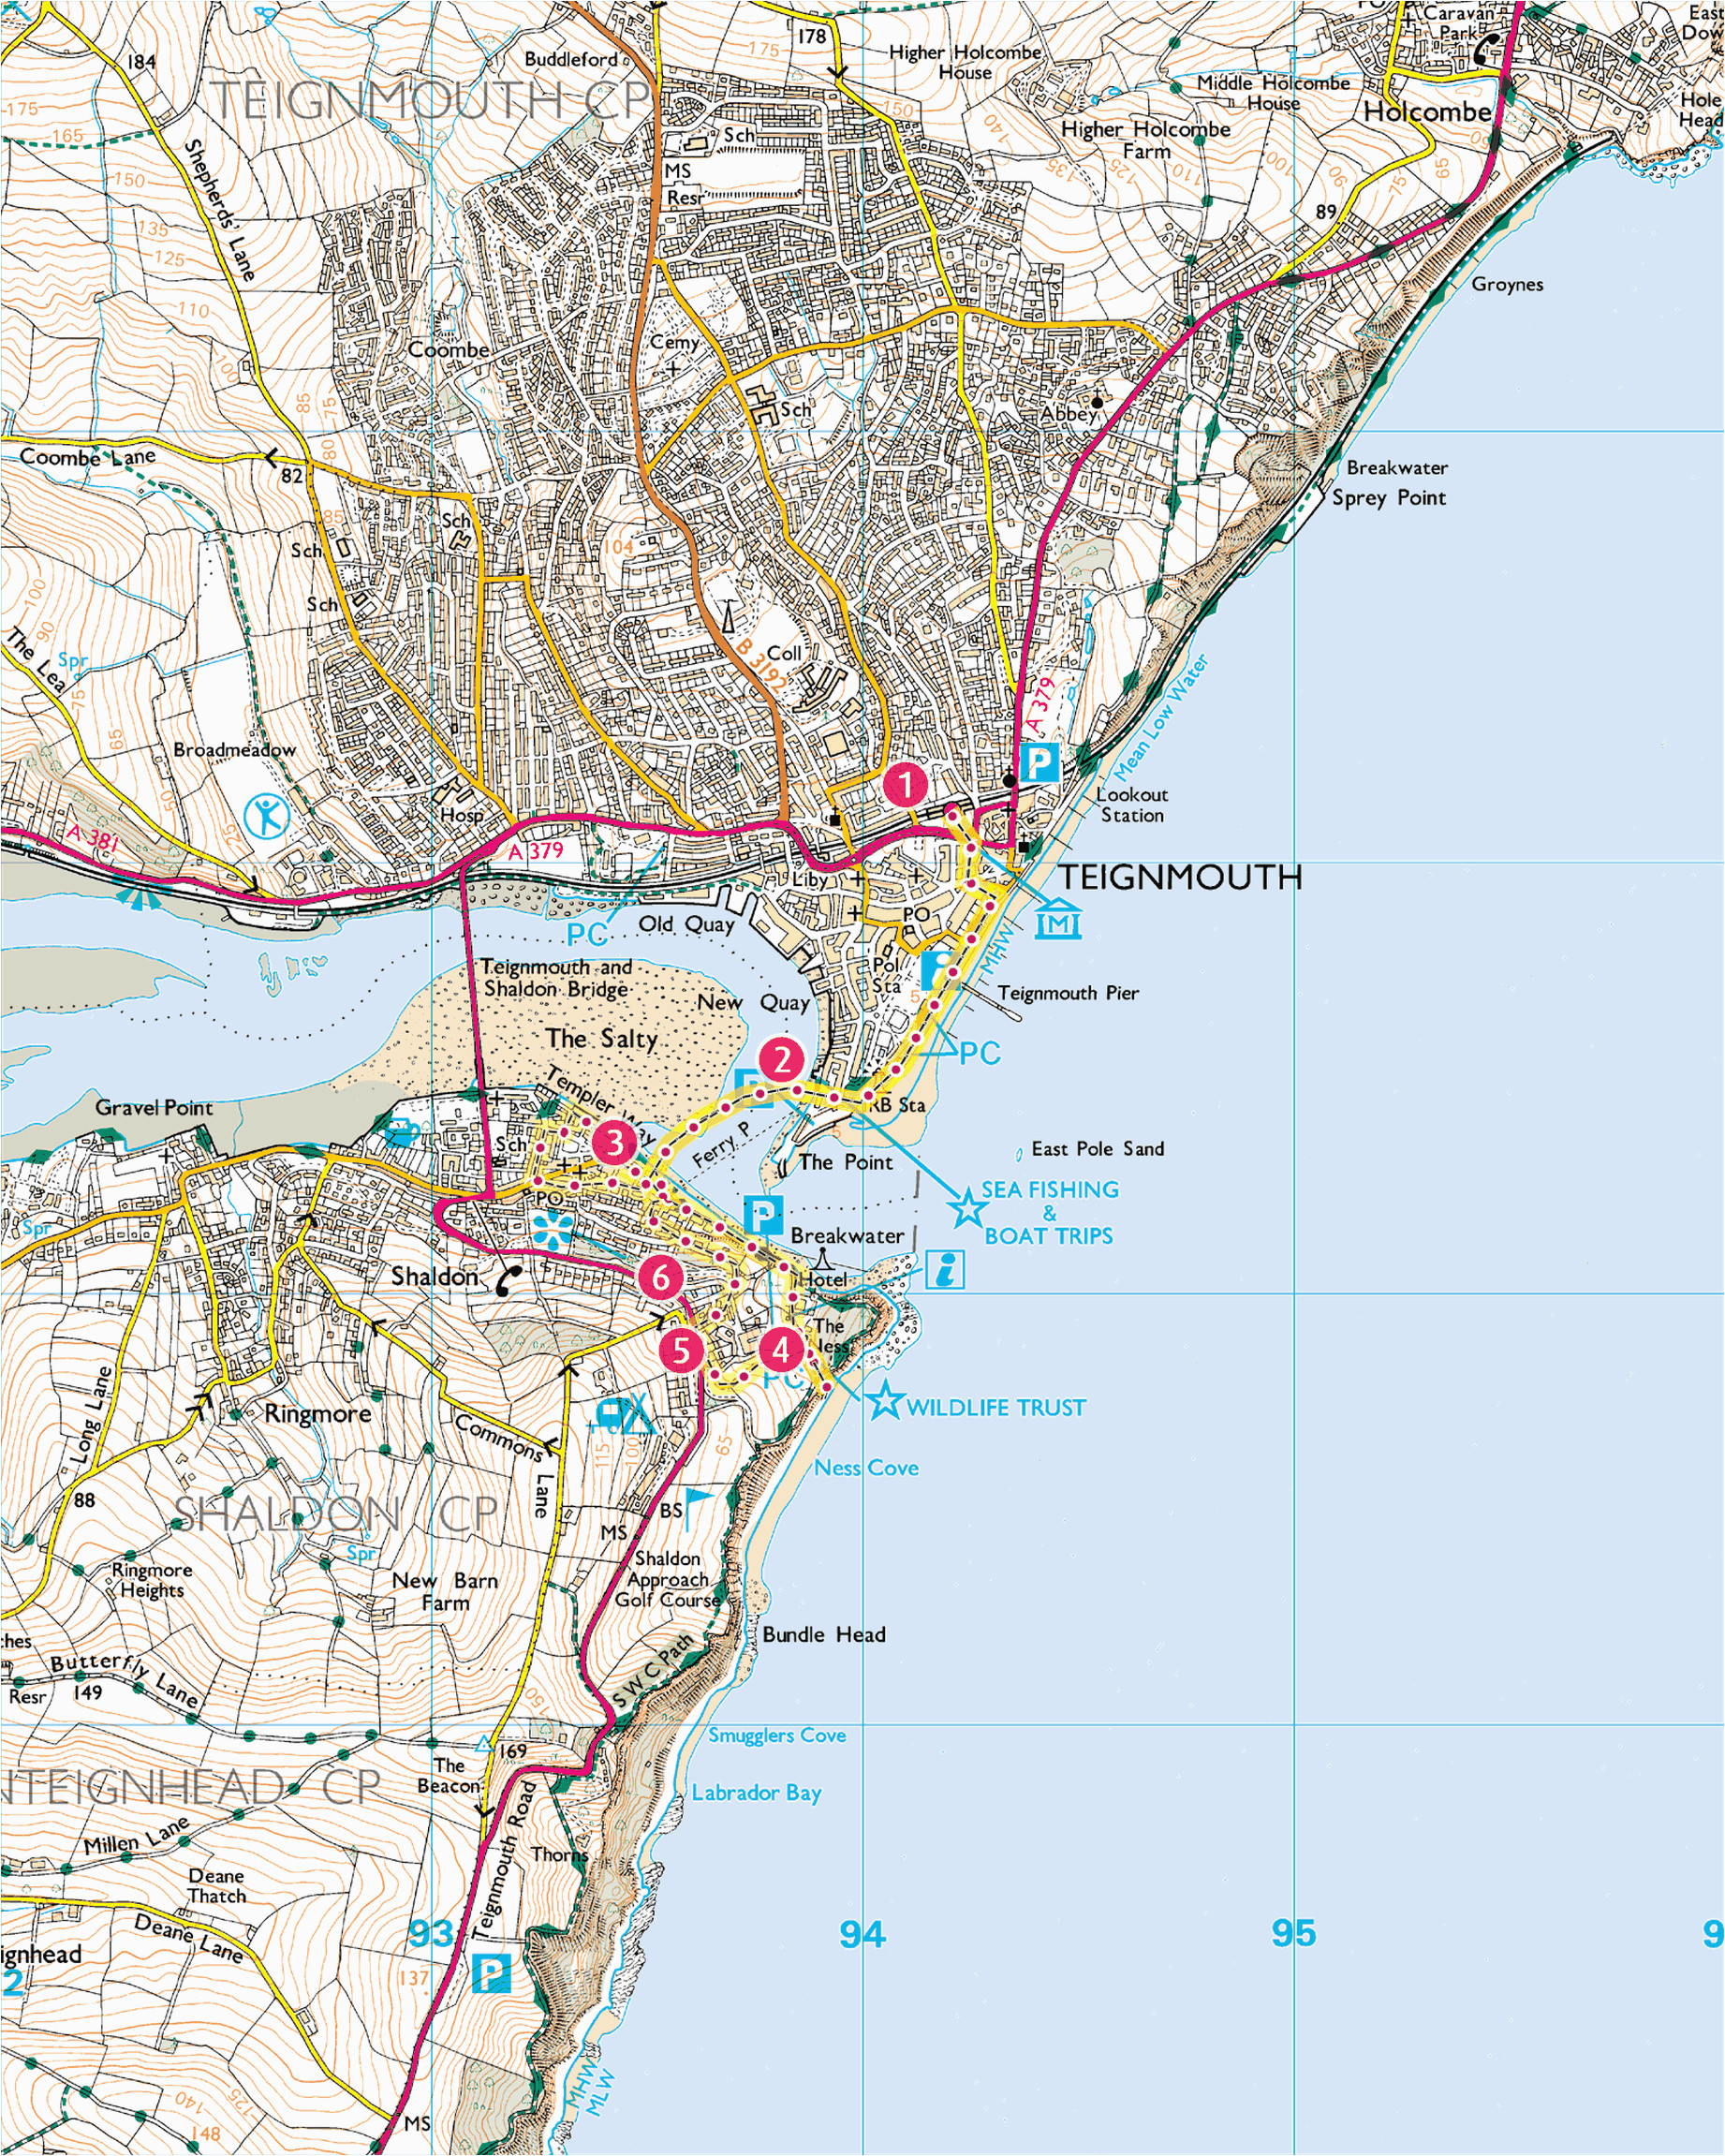 explore shaldon from teignmouth print walk south west coast path